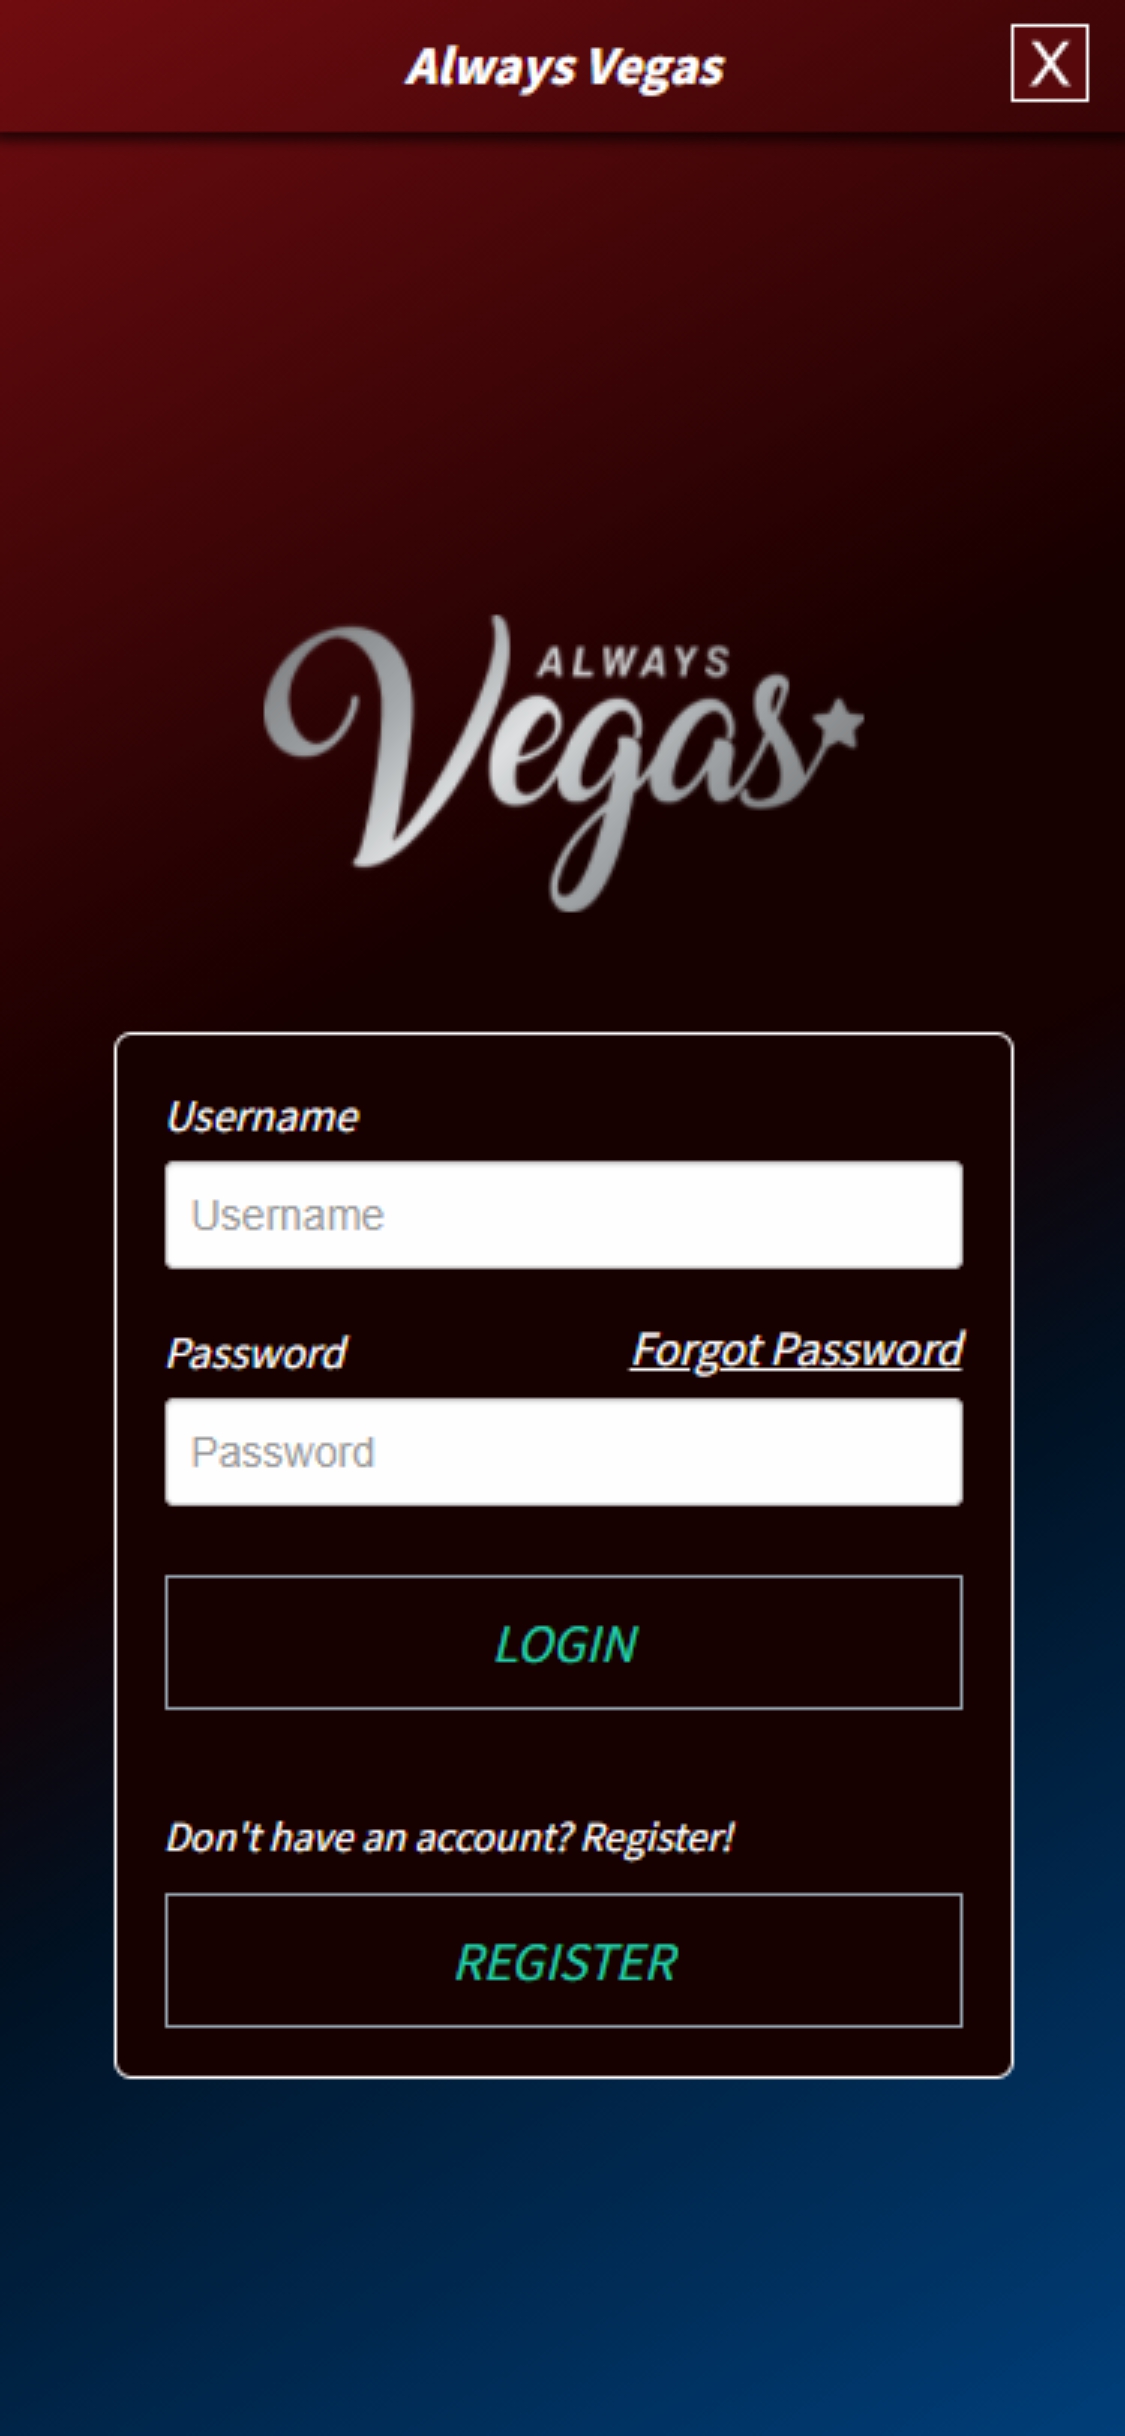 Always Vegas Casino Mobile Login Review